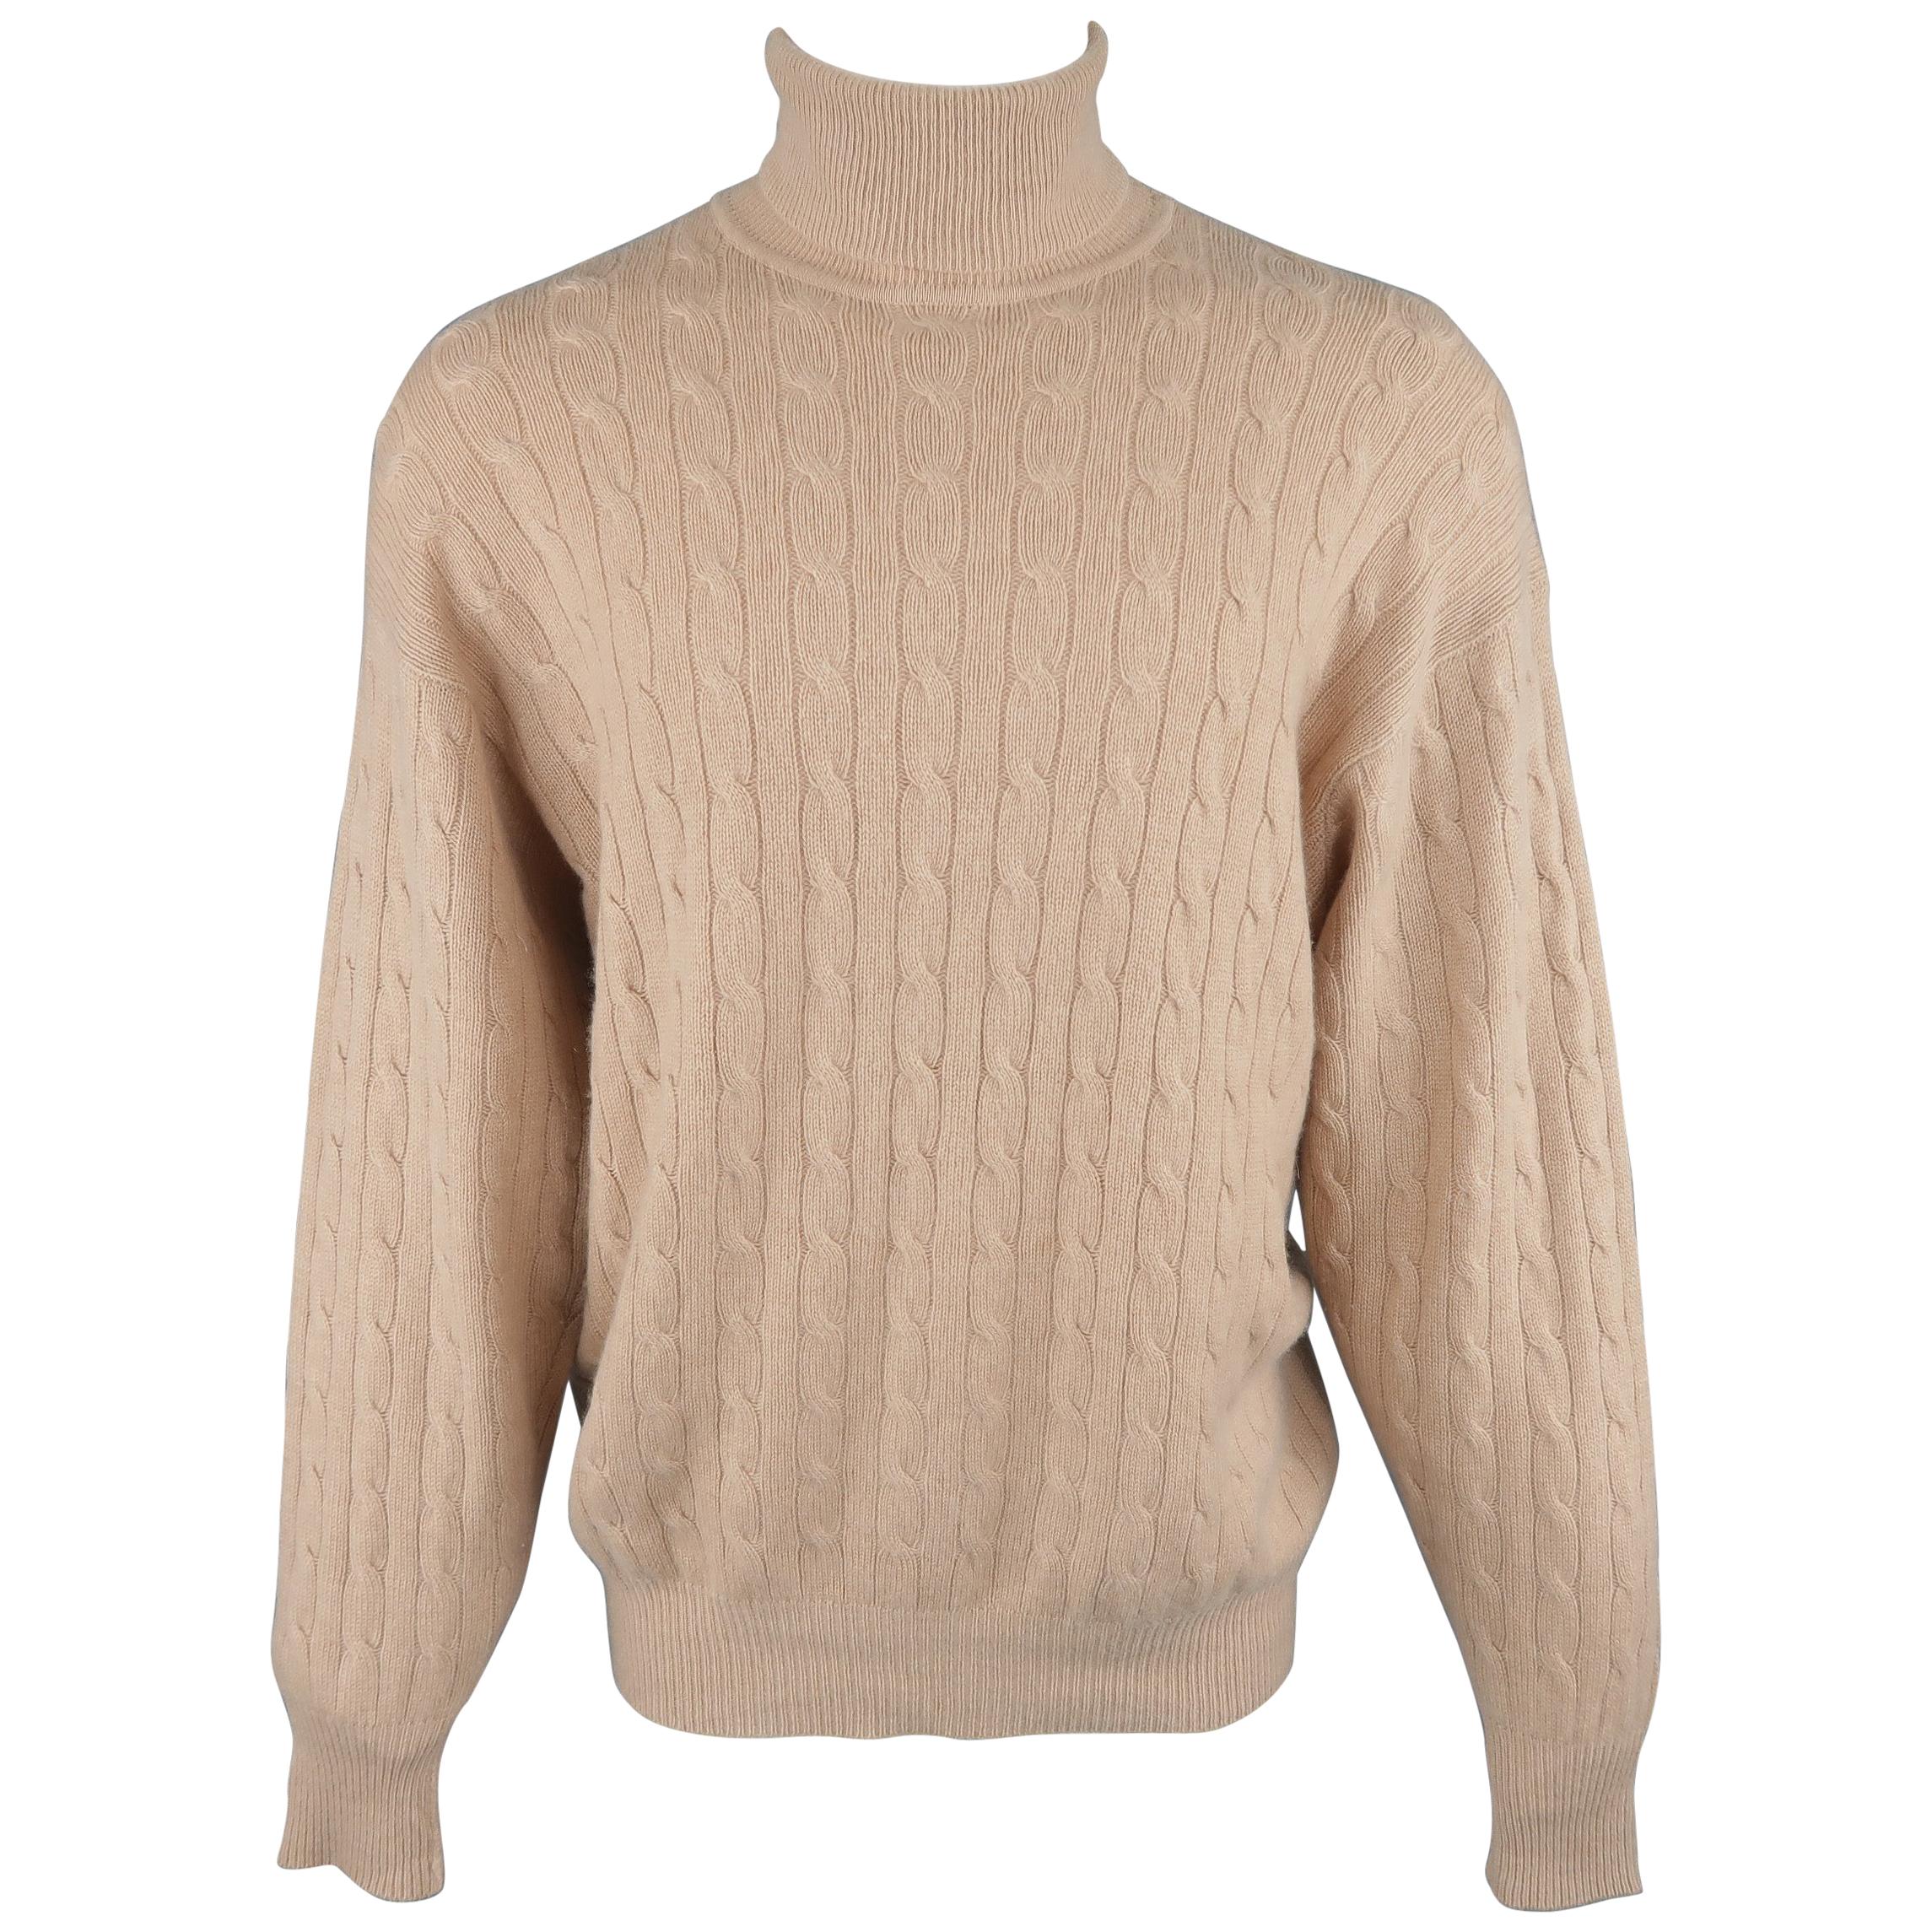  Ralph Lauren Camel Cable Turtleneck Cashmere Sweater